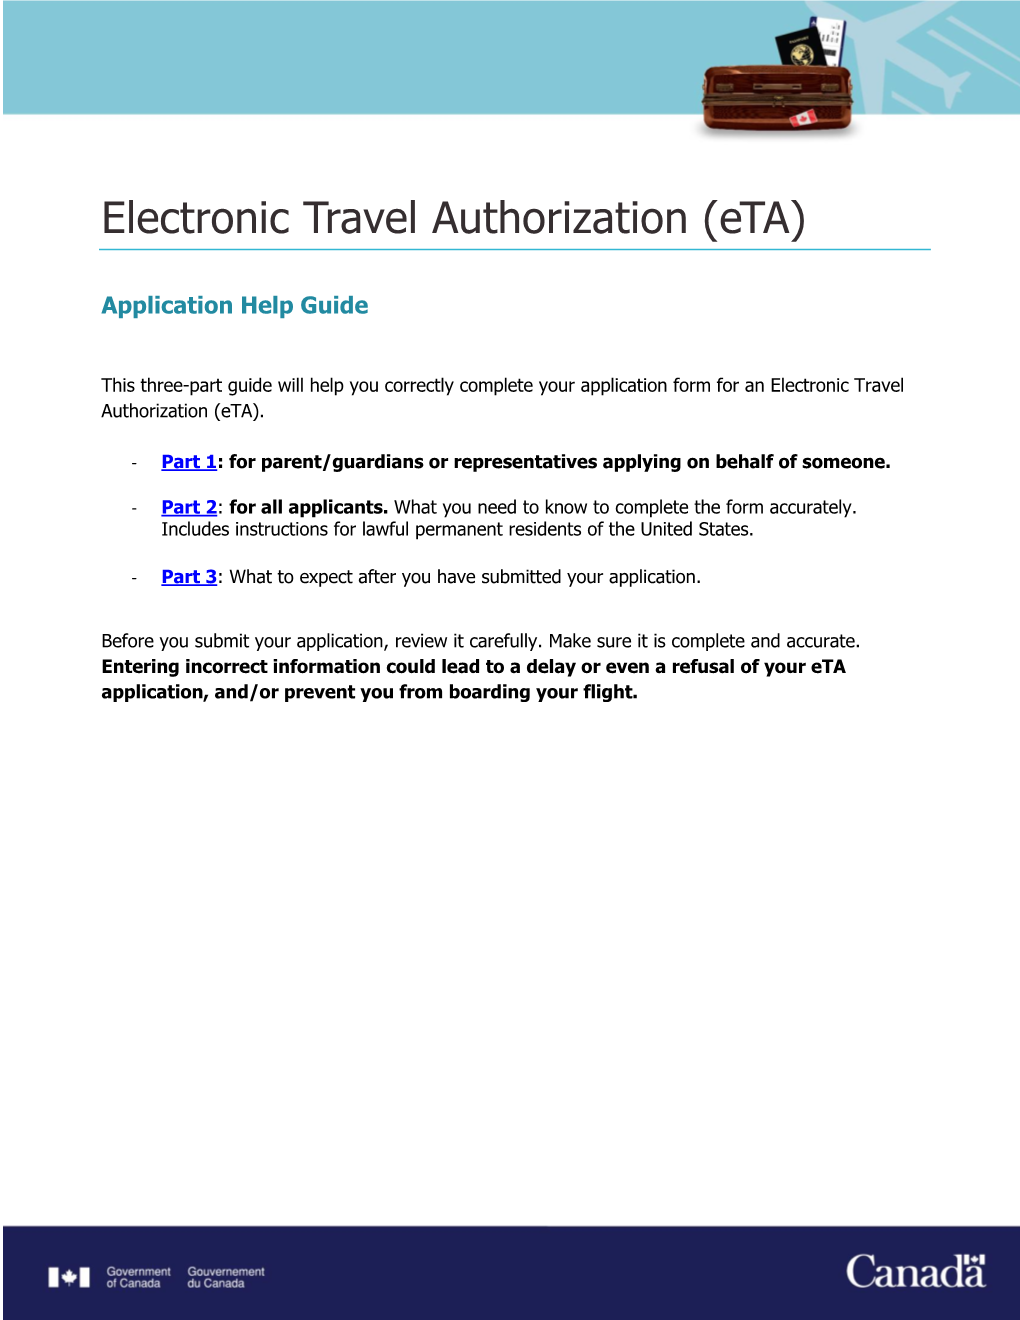 Electronic Travel Authorization (Eta): Application Help Guide